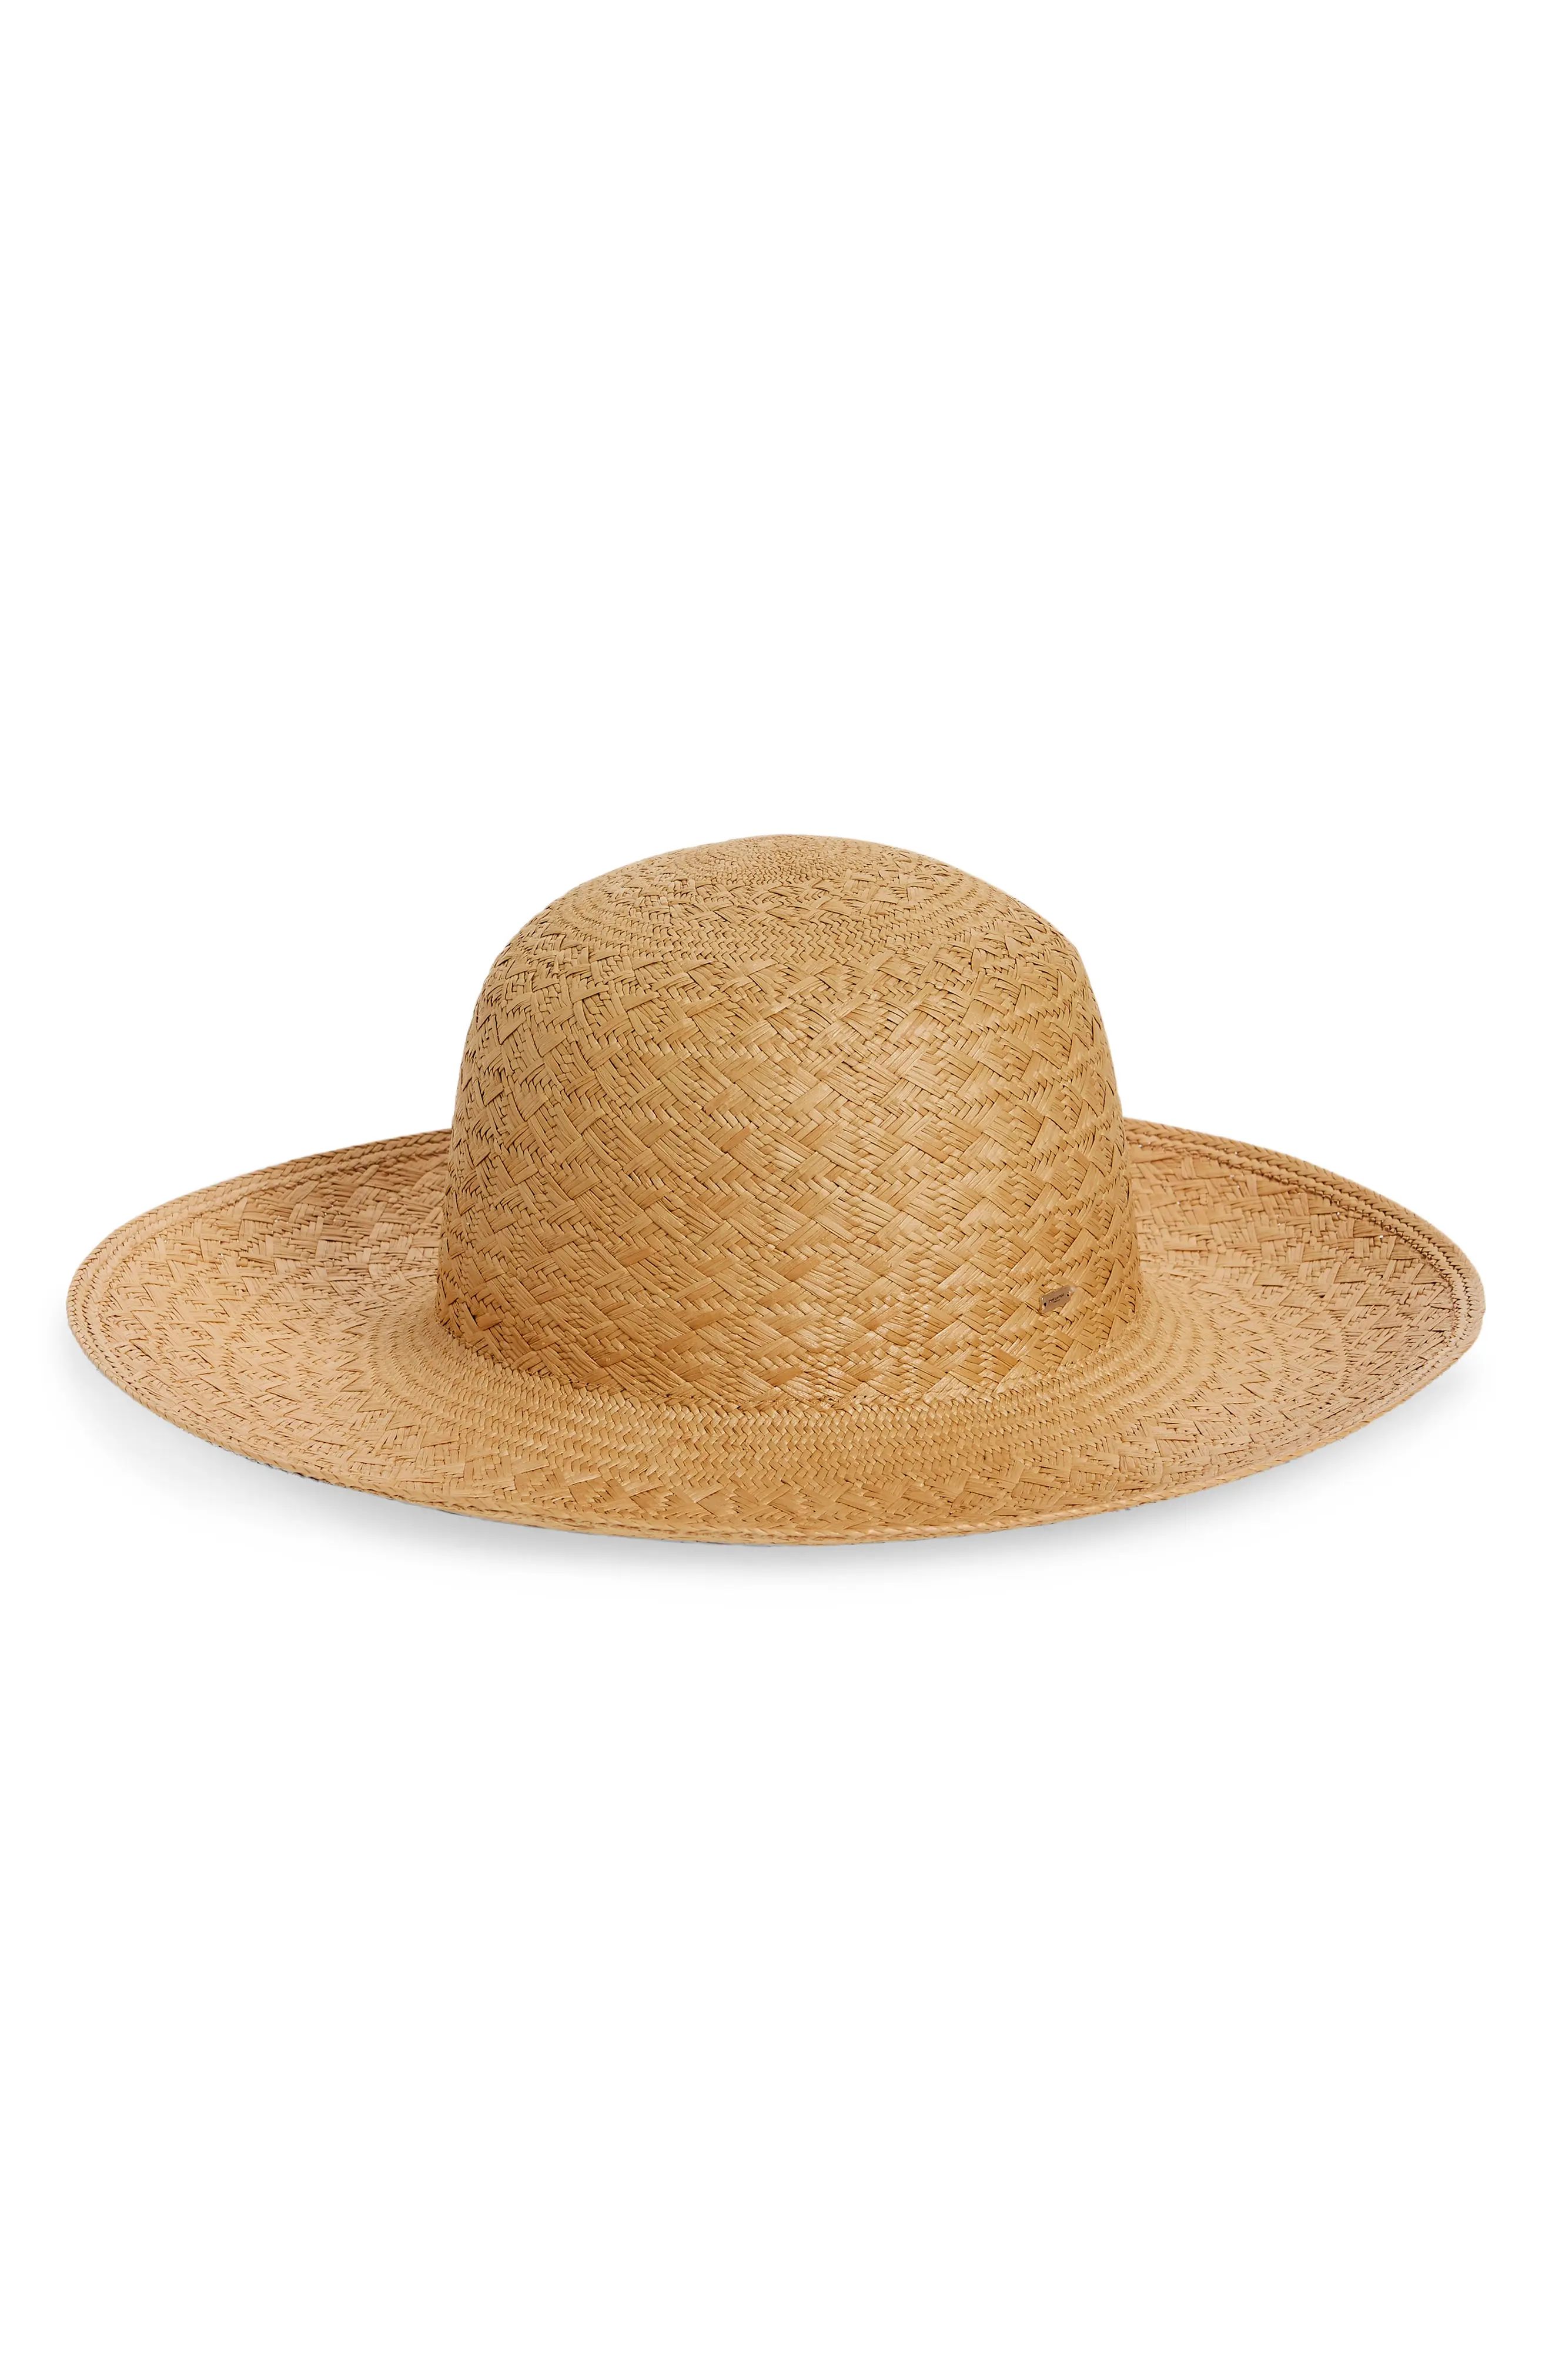 Women's Saint Laurent Maui Straw Hat, Size 58 - Beige | Nordstrom